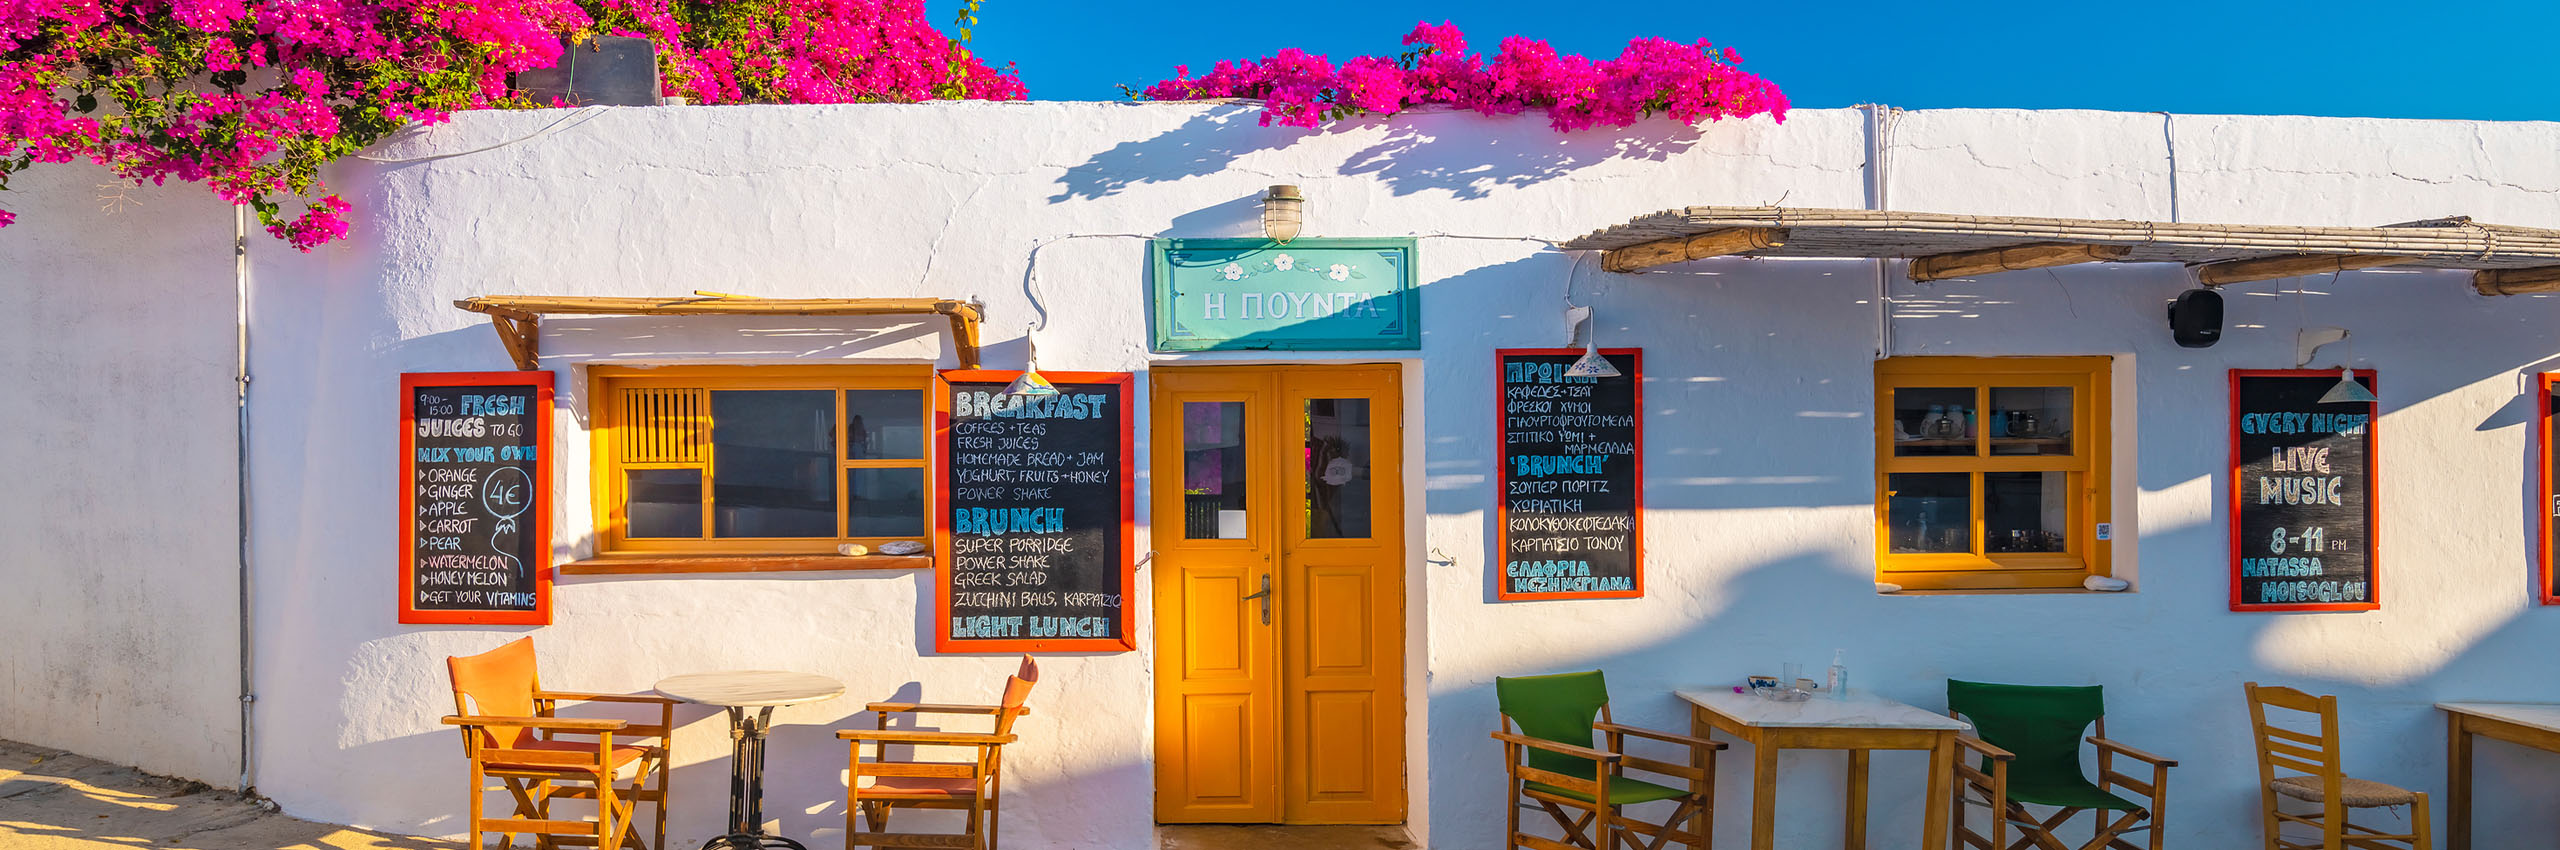 41237678 | Griechenland/Ägäische Inseln, Kykladen, Insel Folegandros | © Giorgio Filippini/HUBER IMAGES